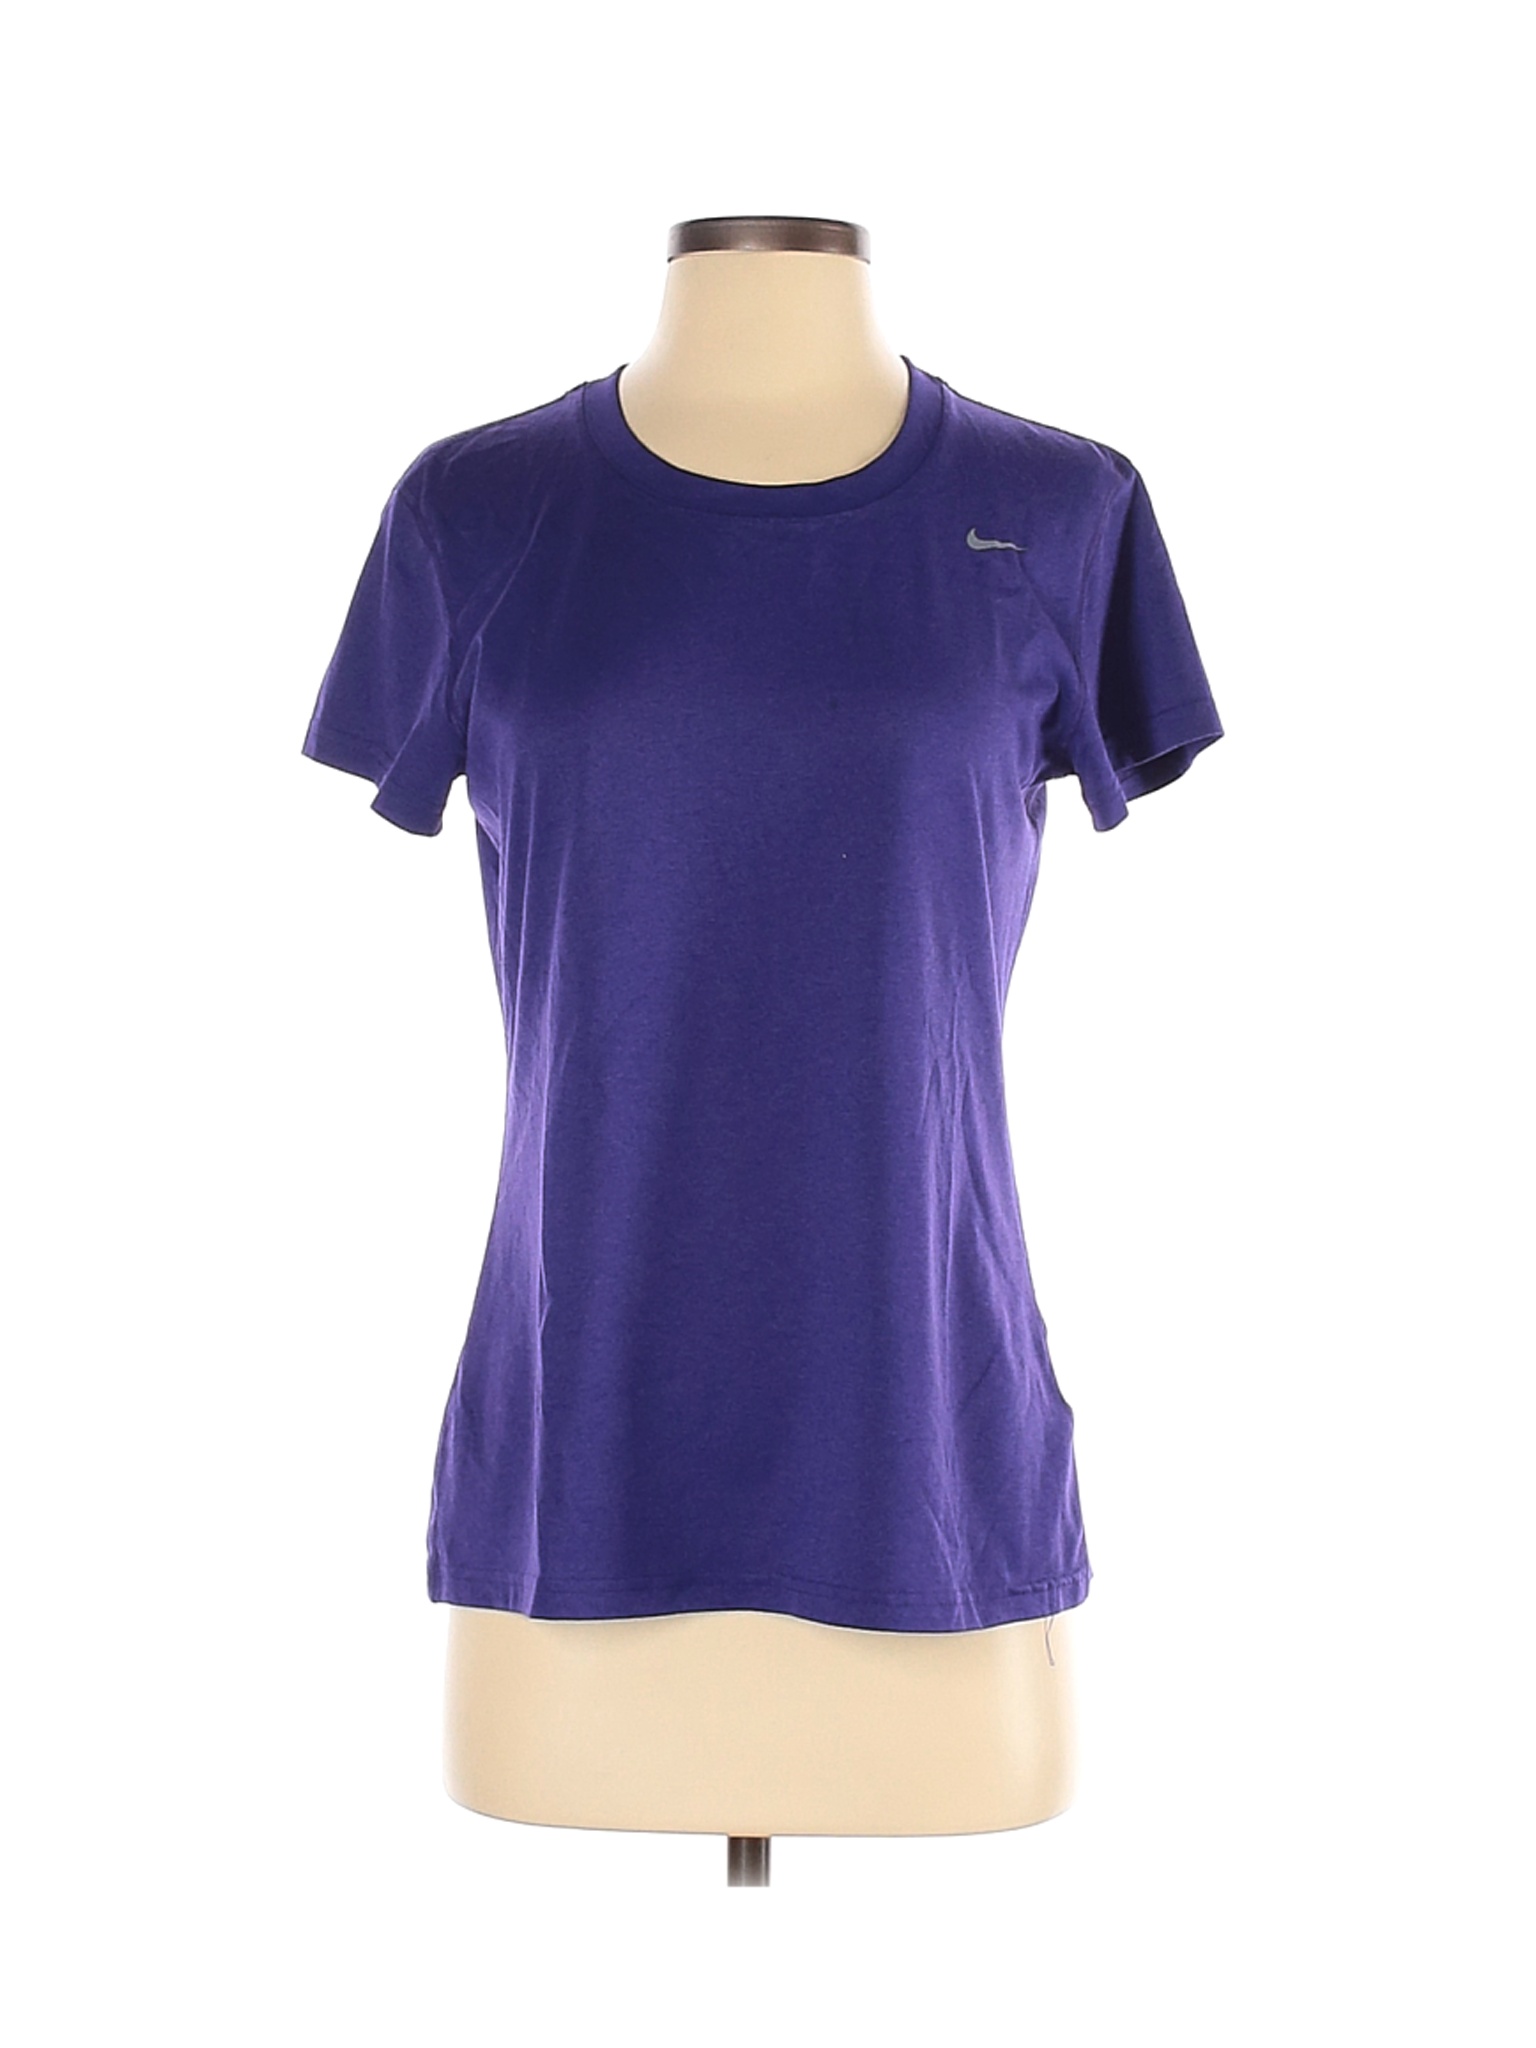 Nike Women Purple Active T-Shirt S | eBay